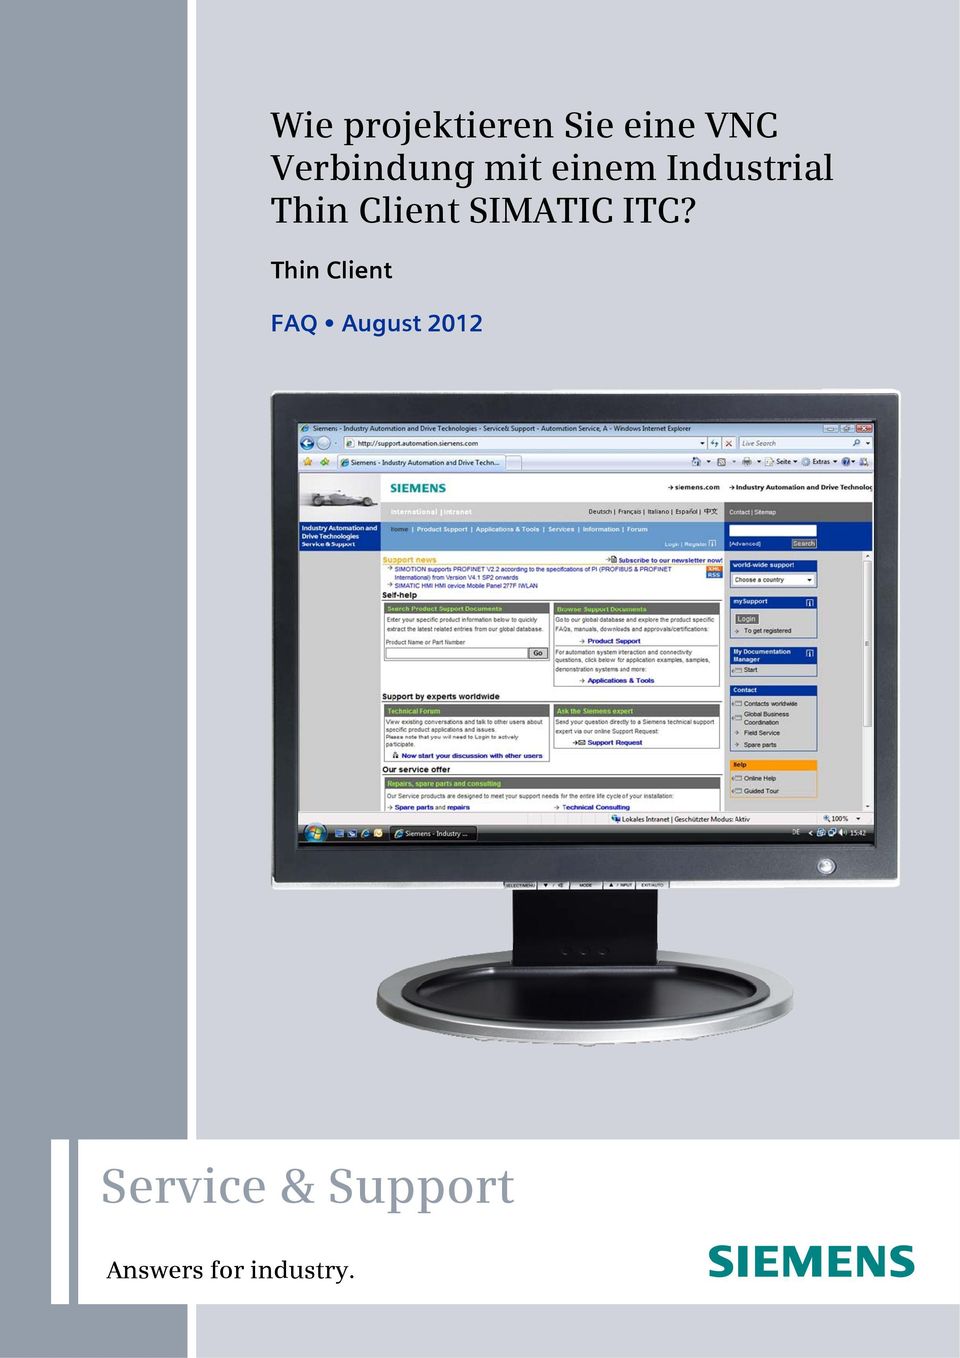 Client SIMATIC ITC?